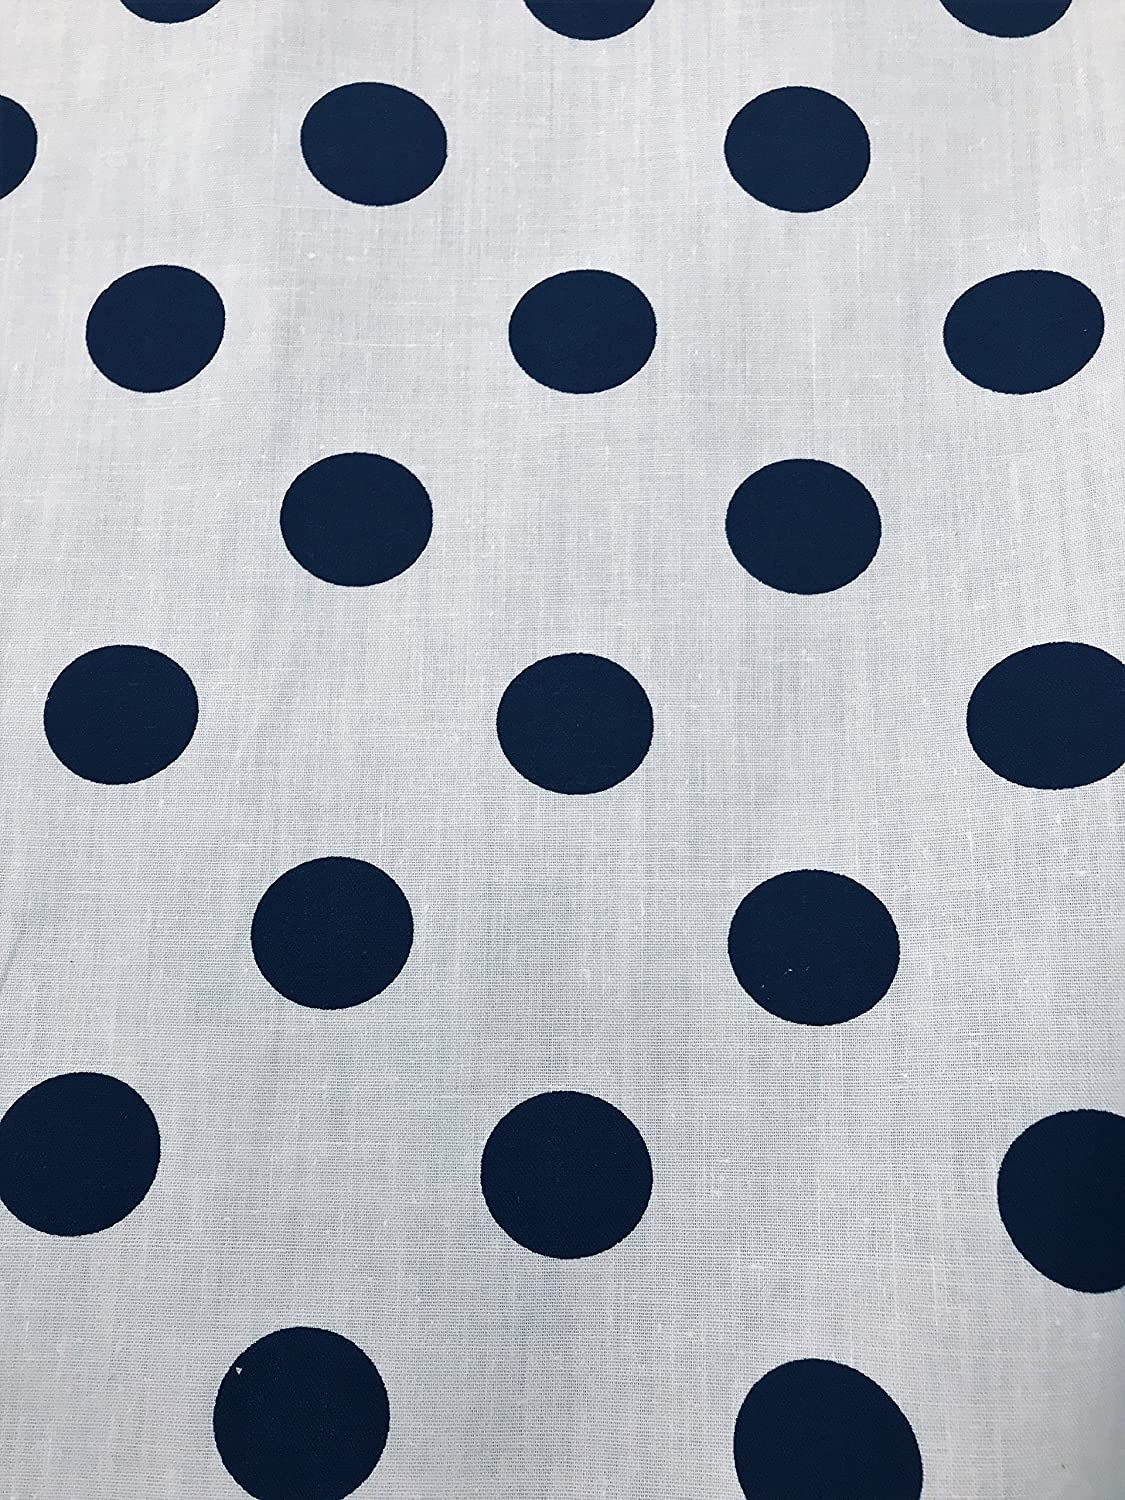 Big Polka Dots Poly Cotton Print Fabric by The Yard (White/Navy Dots)